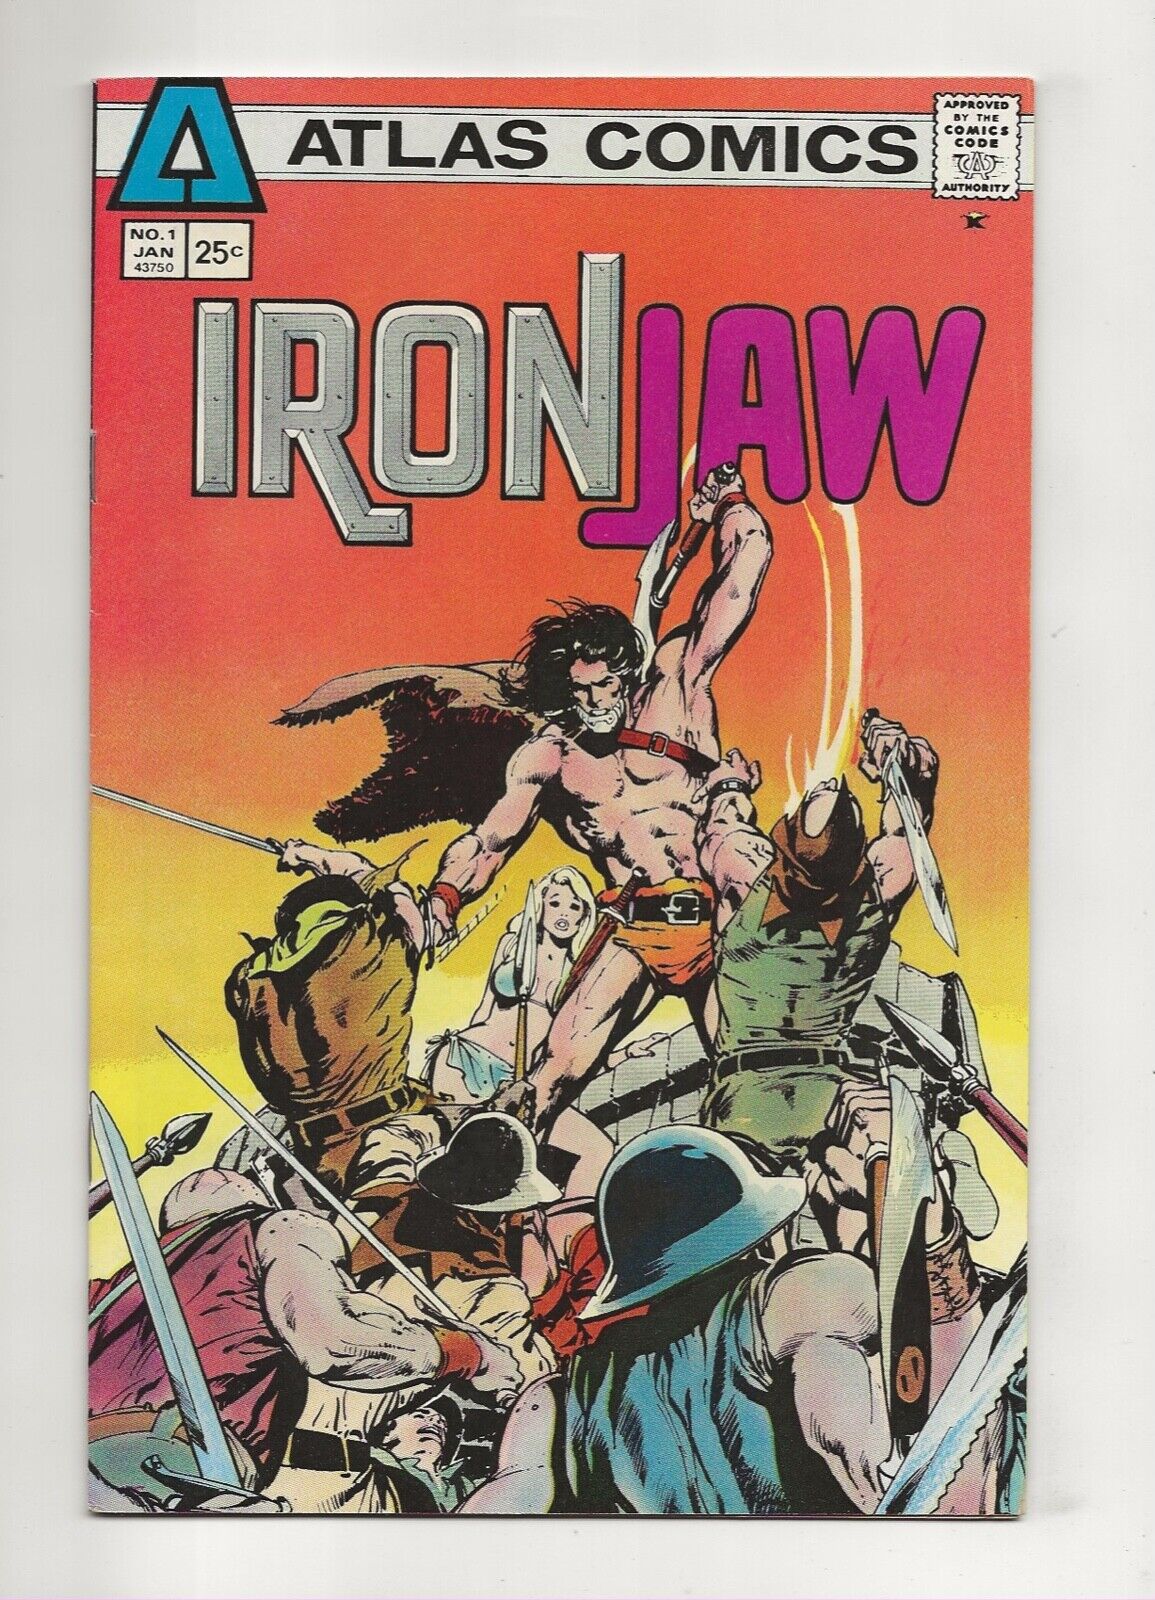 IronJaw #1-4 (1975) #1,2,3,4 Atlas Comics High Grade VF/NM 9.0